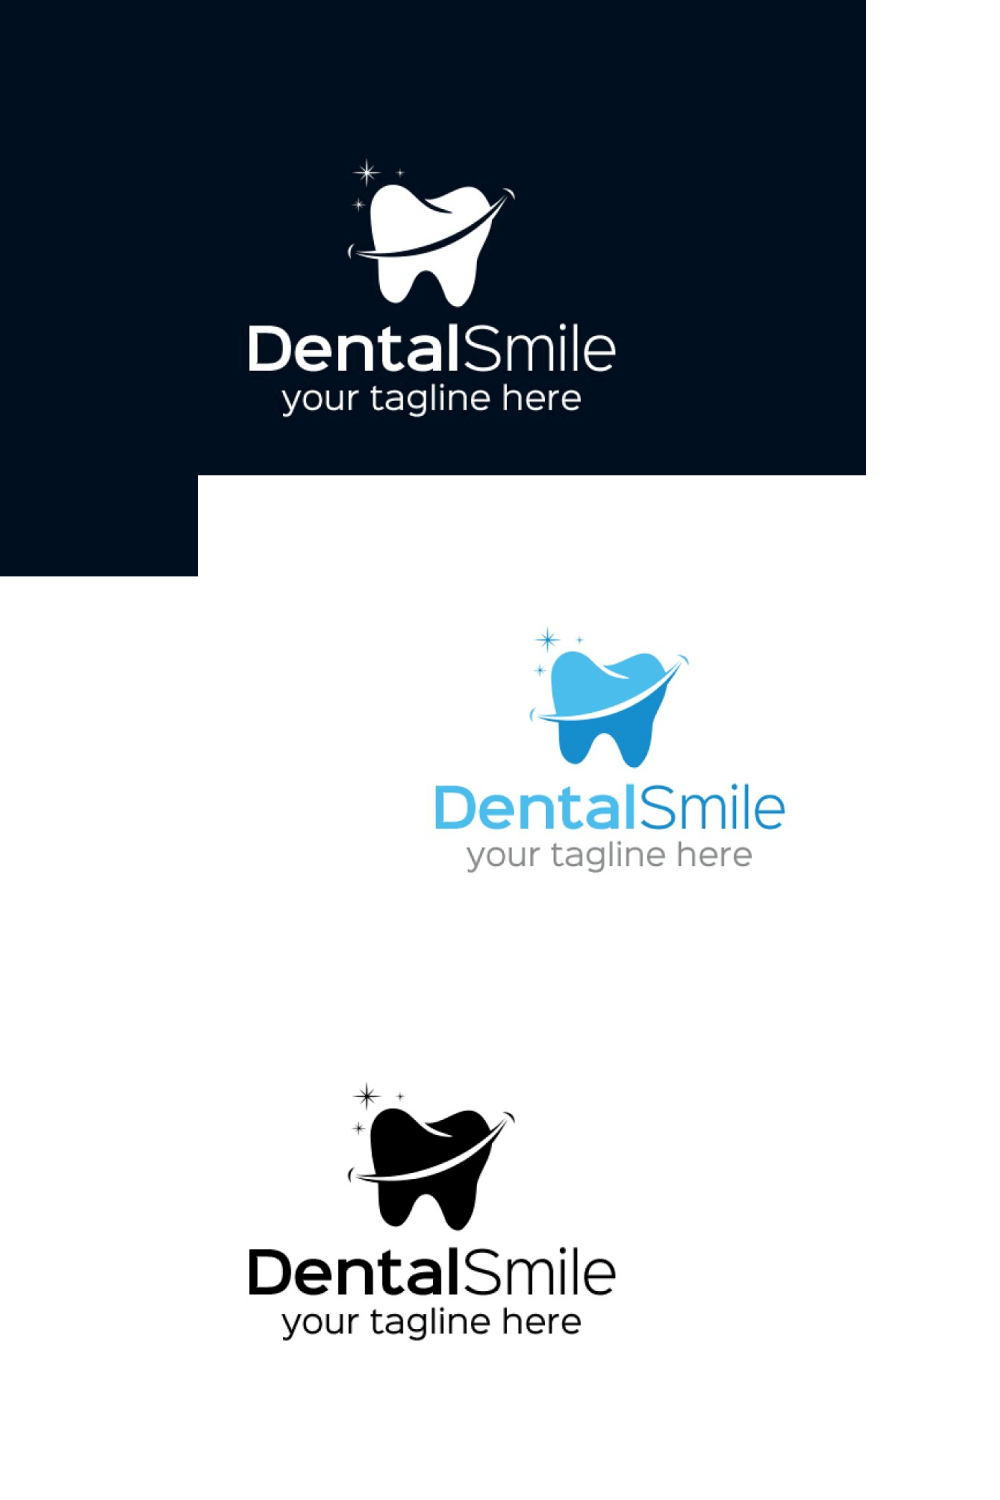 Three Types of Dental Smile.